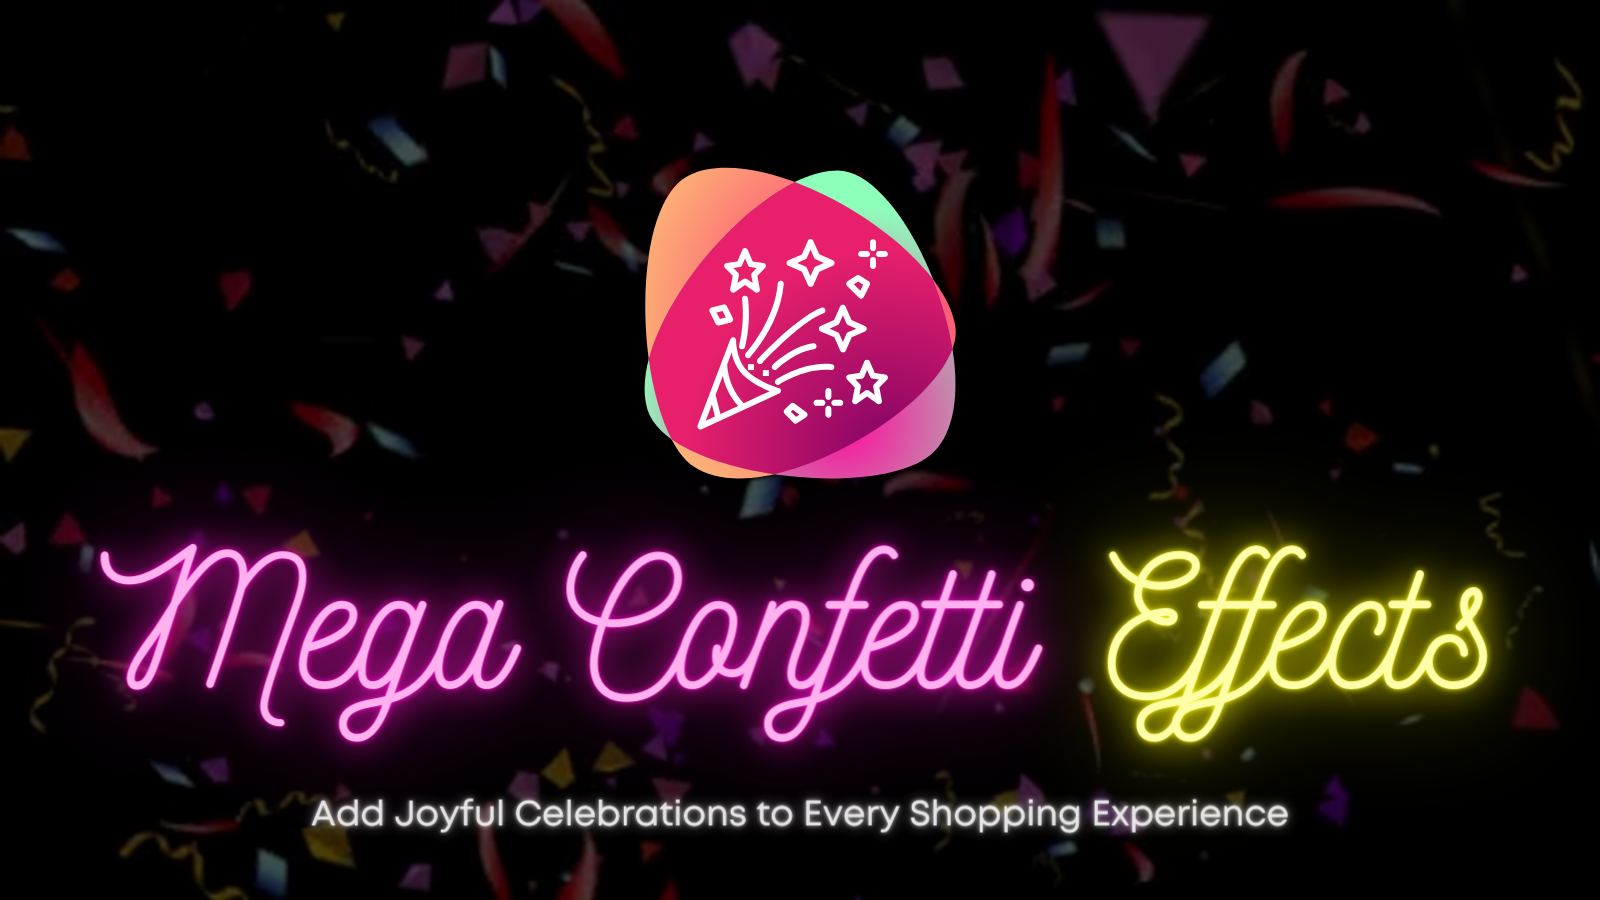 Mega Confetti Effects Fortryl din butik med blændende konfetti!